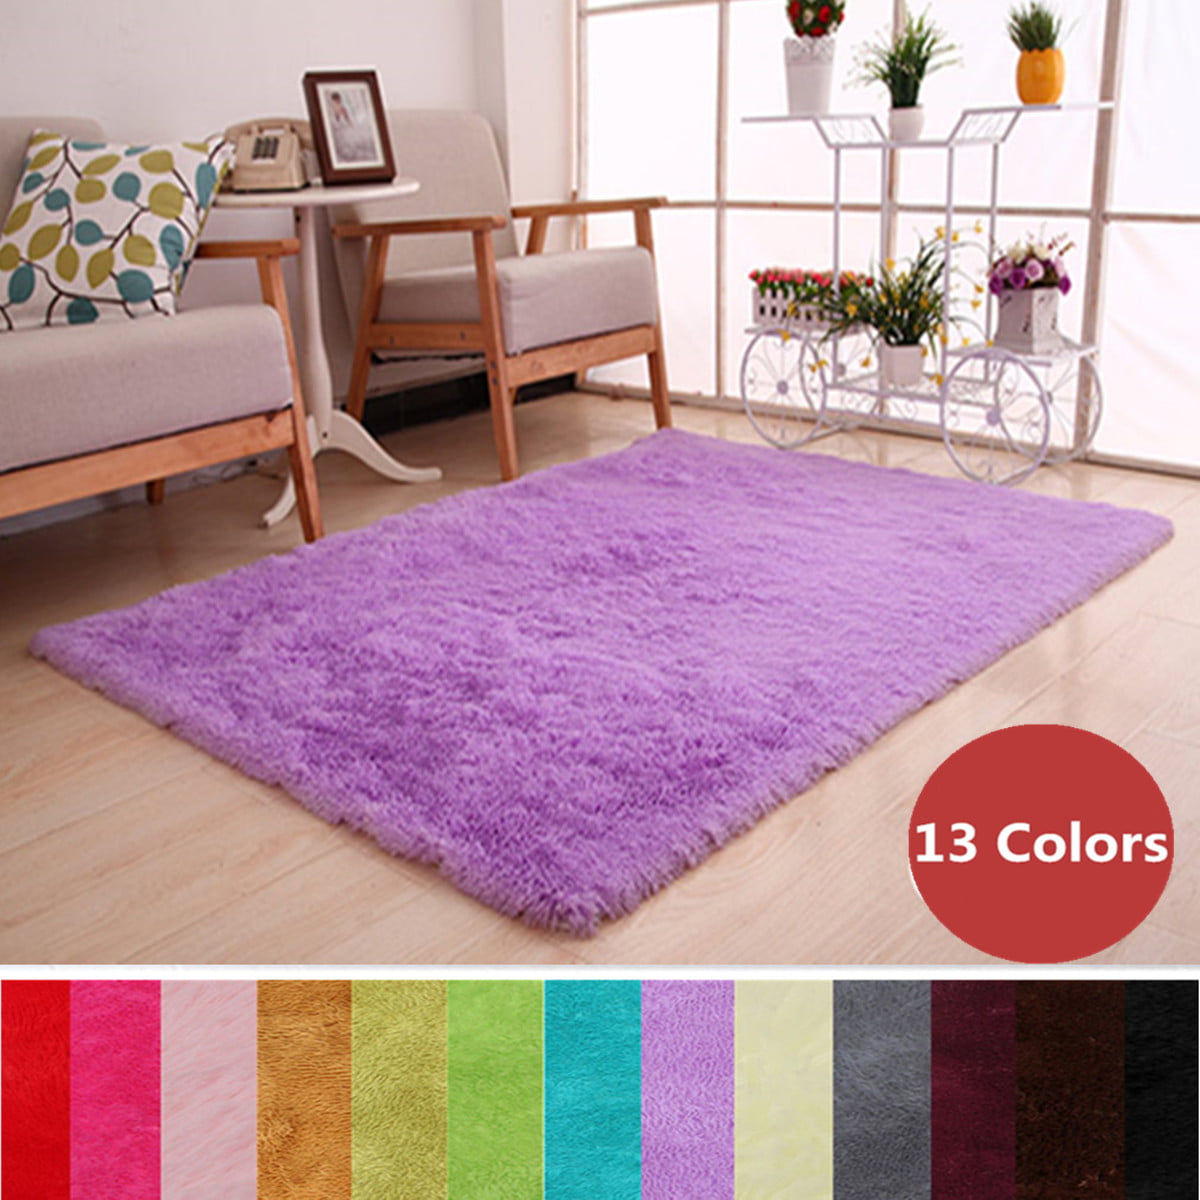 80x58 Inch Soft Area Rug and Carpet Floor Rug,Kawaii Fruits on Dark Purple Carpet for Bedroom and Living Room